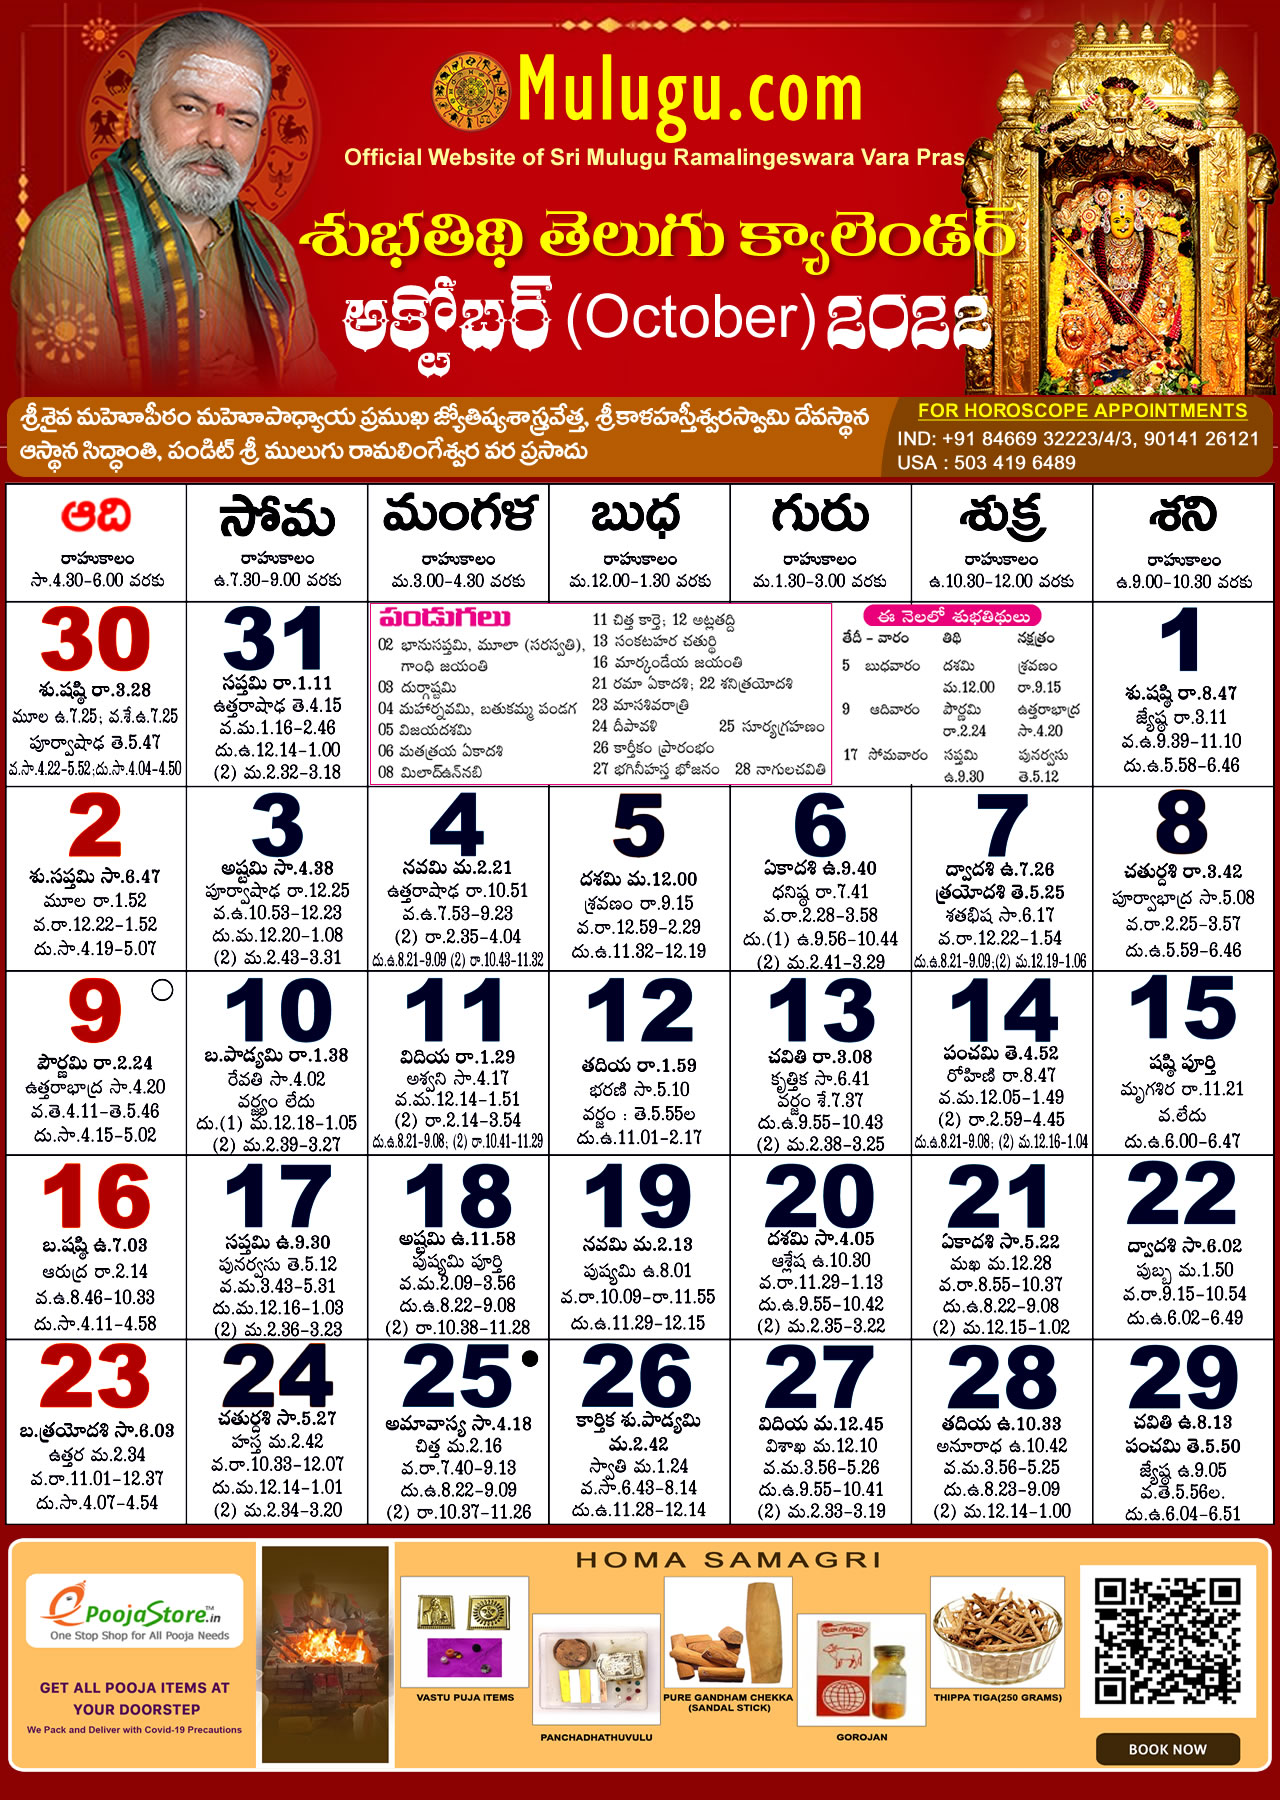 Telugu Calendar October 2022 Subhathidi October Telugu Calendar 2022 | Telugu Calendar 2022 - 2023 |  Telugu Subhathidi Calendar 2022 | Calendar 2022 | Telugu Calendar 2022 |  Subhathidi Calendar 2022 | Chicago Calendar 2022 |